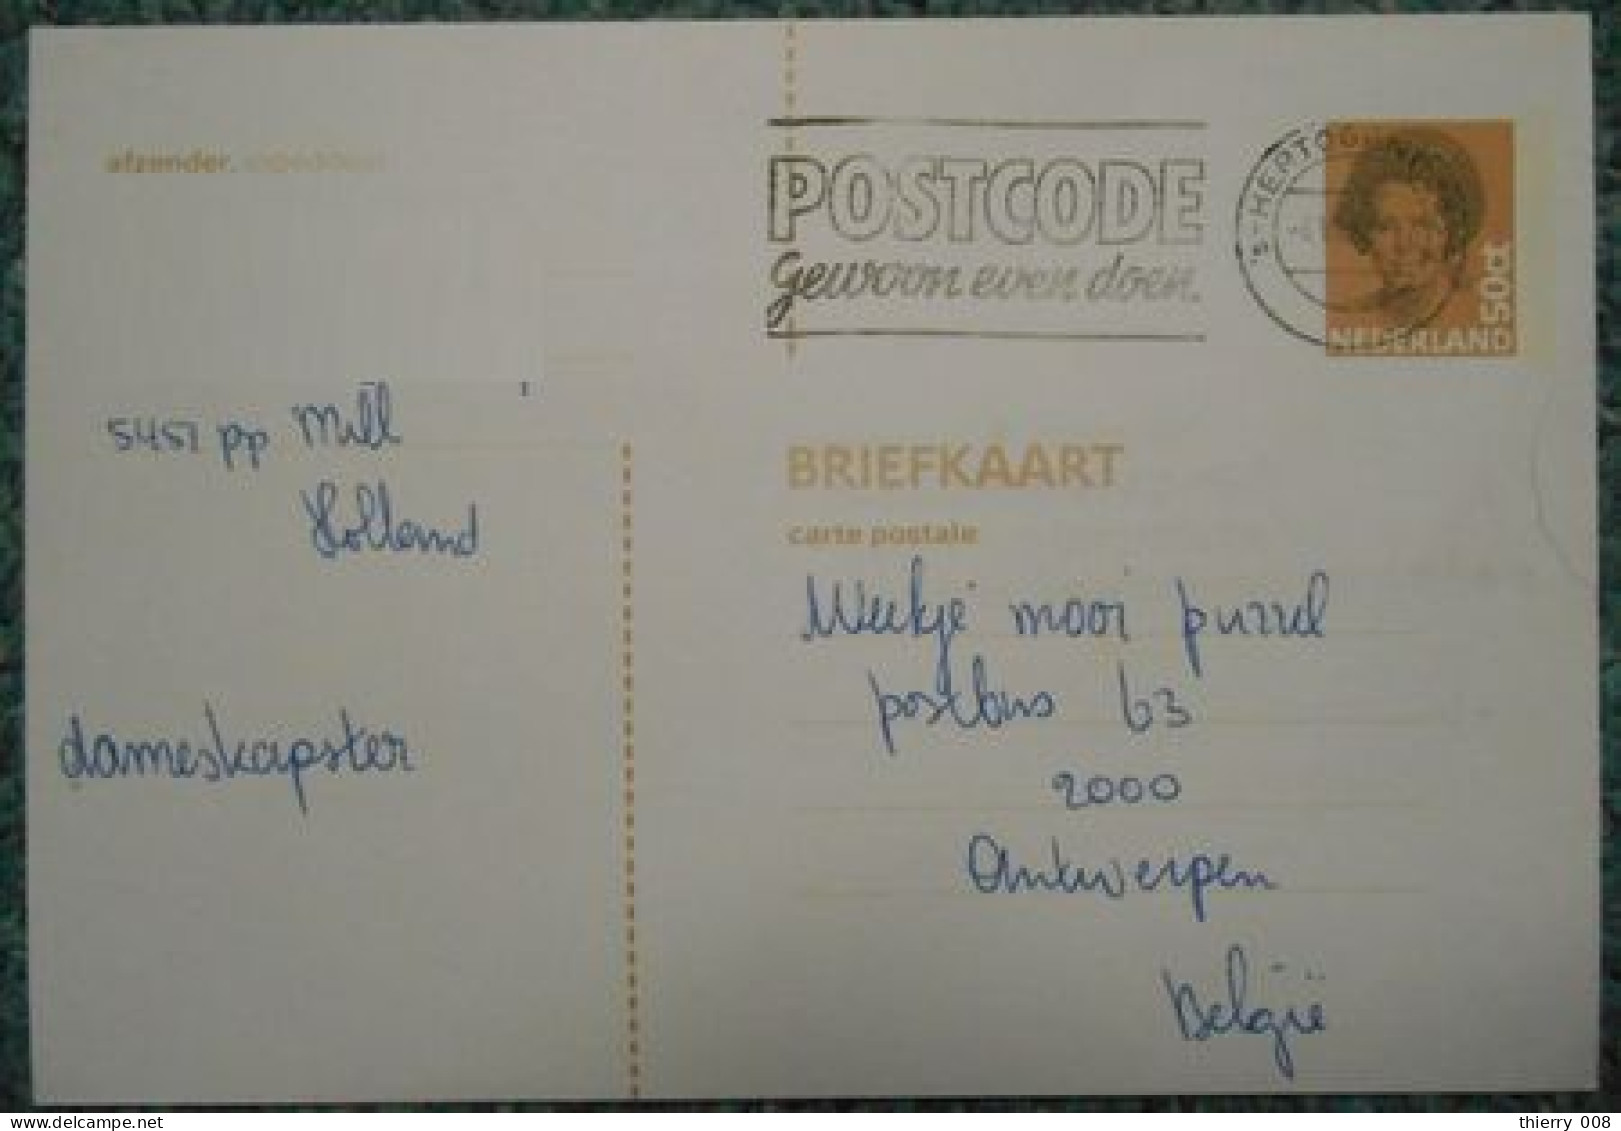 105- PAP Carte Nederland Pays-Bas Oblitération Postcode Gewoon Even Doen - Kartenbriefe